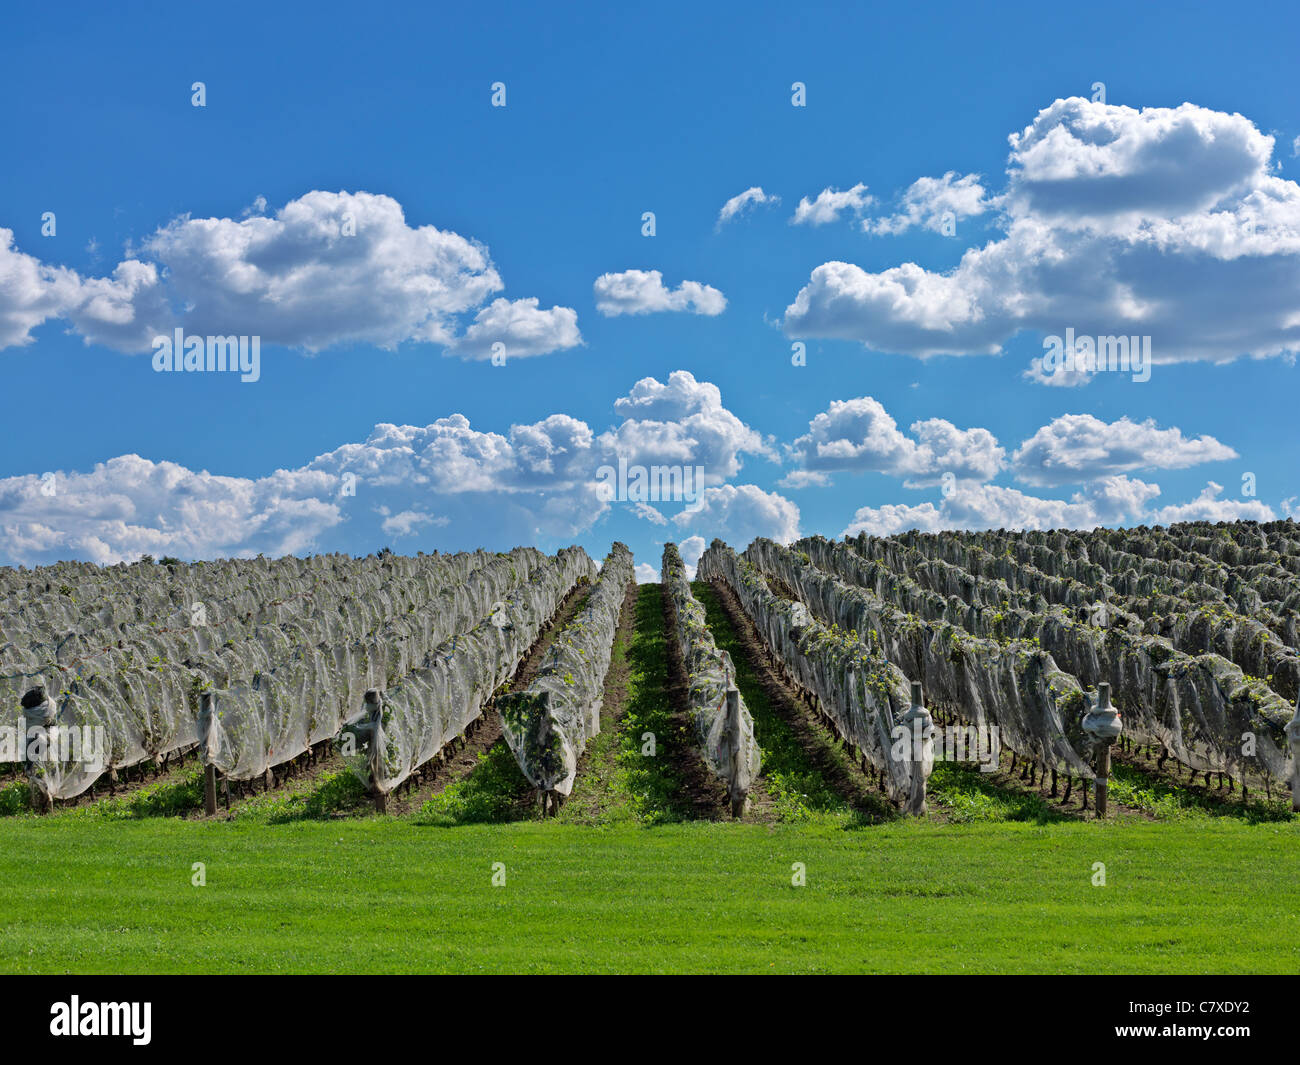 Canada,Ontario,Beamsville,rows of grapevines Stock Photo